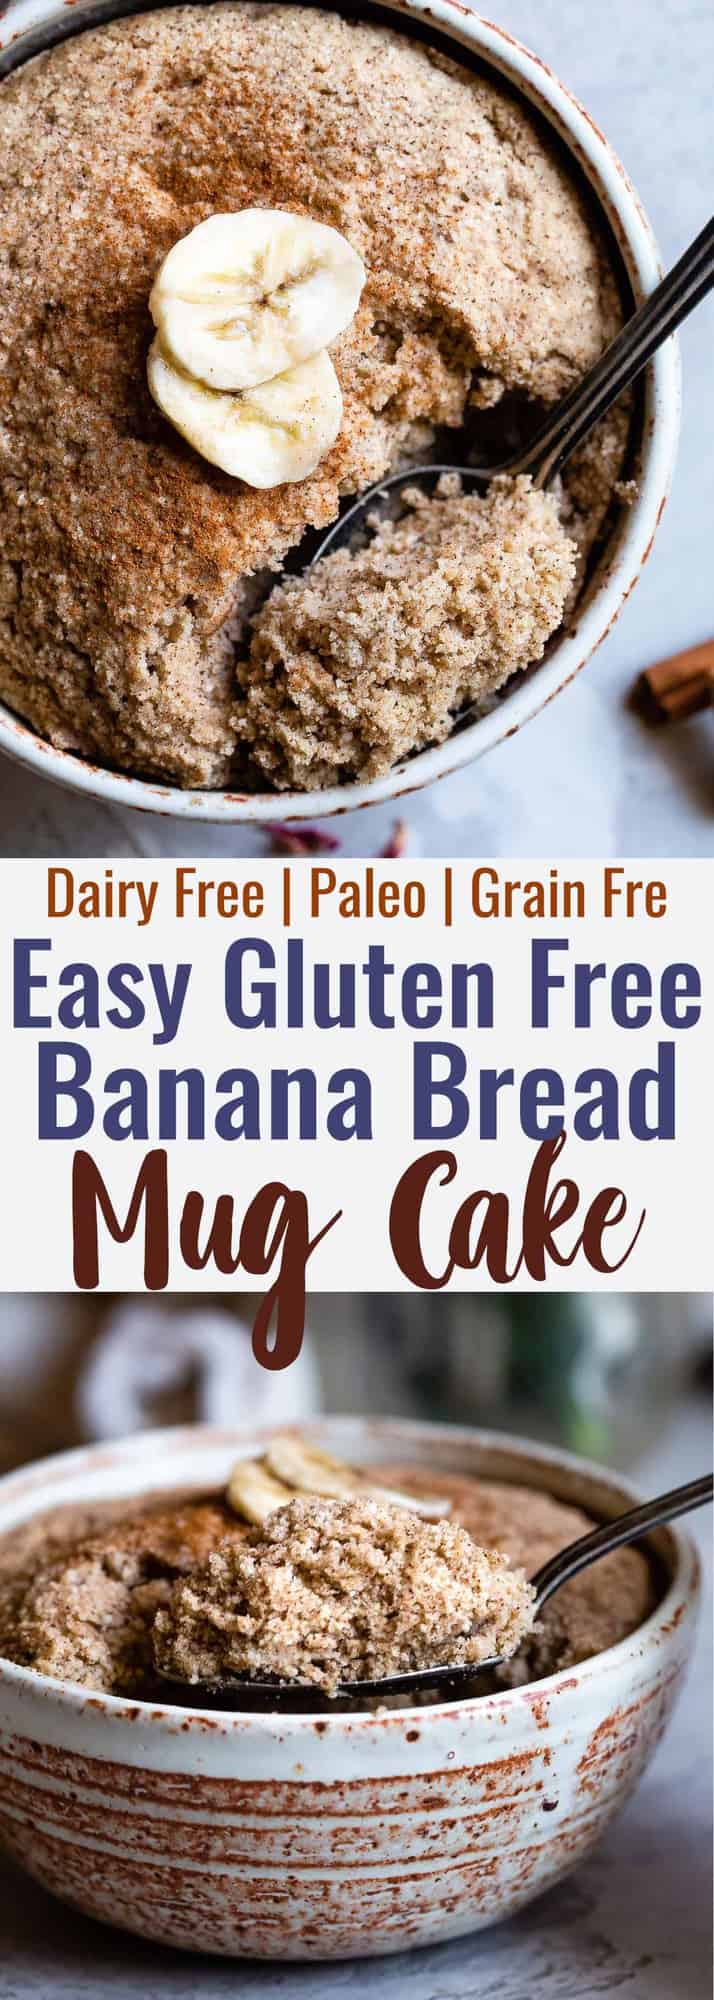 Easy Gluten Free Banana Bread Mug Cake - Want banana bread right now? Yes you do! Make this 5 minute, healthy, gluten free and paleo friendly banana bread in a mug! No waiting to cool nonsense! | #Foodfaithfitness | #Glutenfree #paleo #grainfree #bananabread #healthy